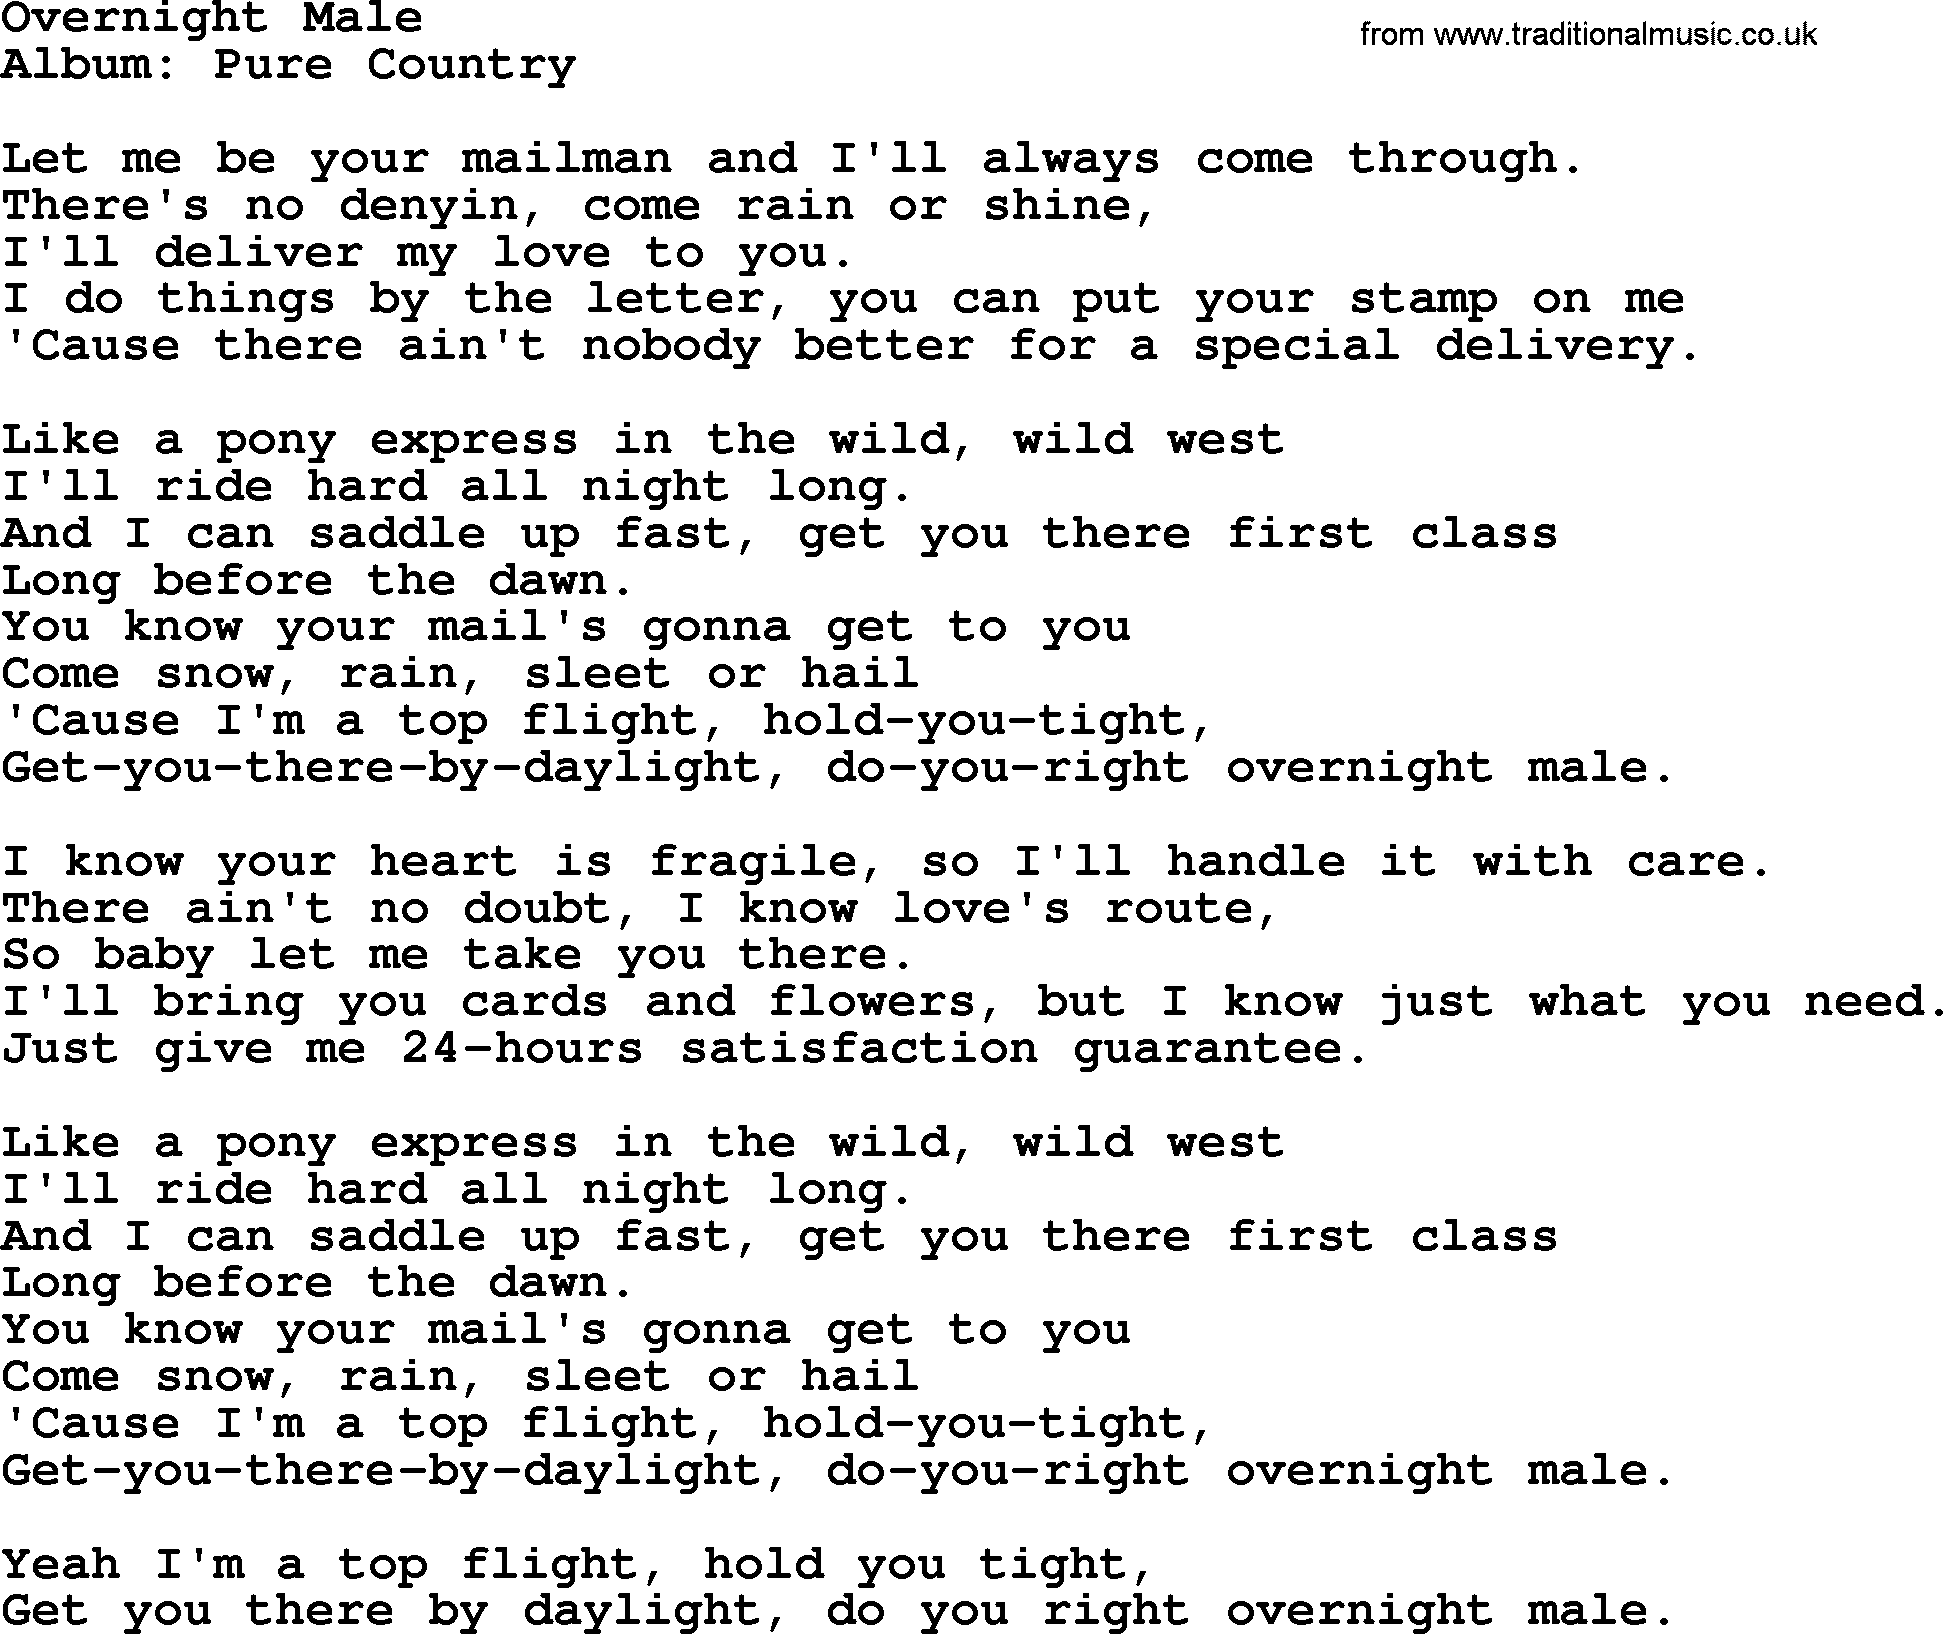 George Strait song: Overnight Male, lyrics